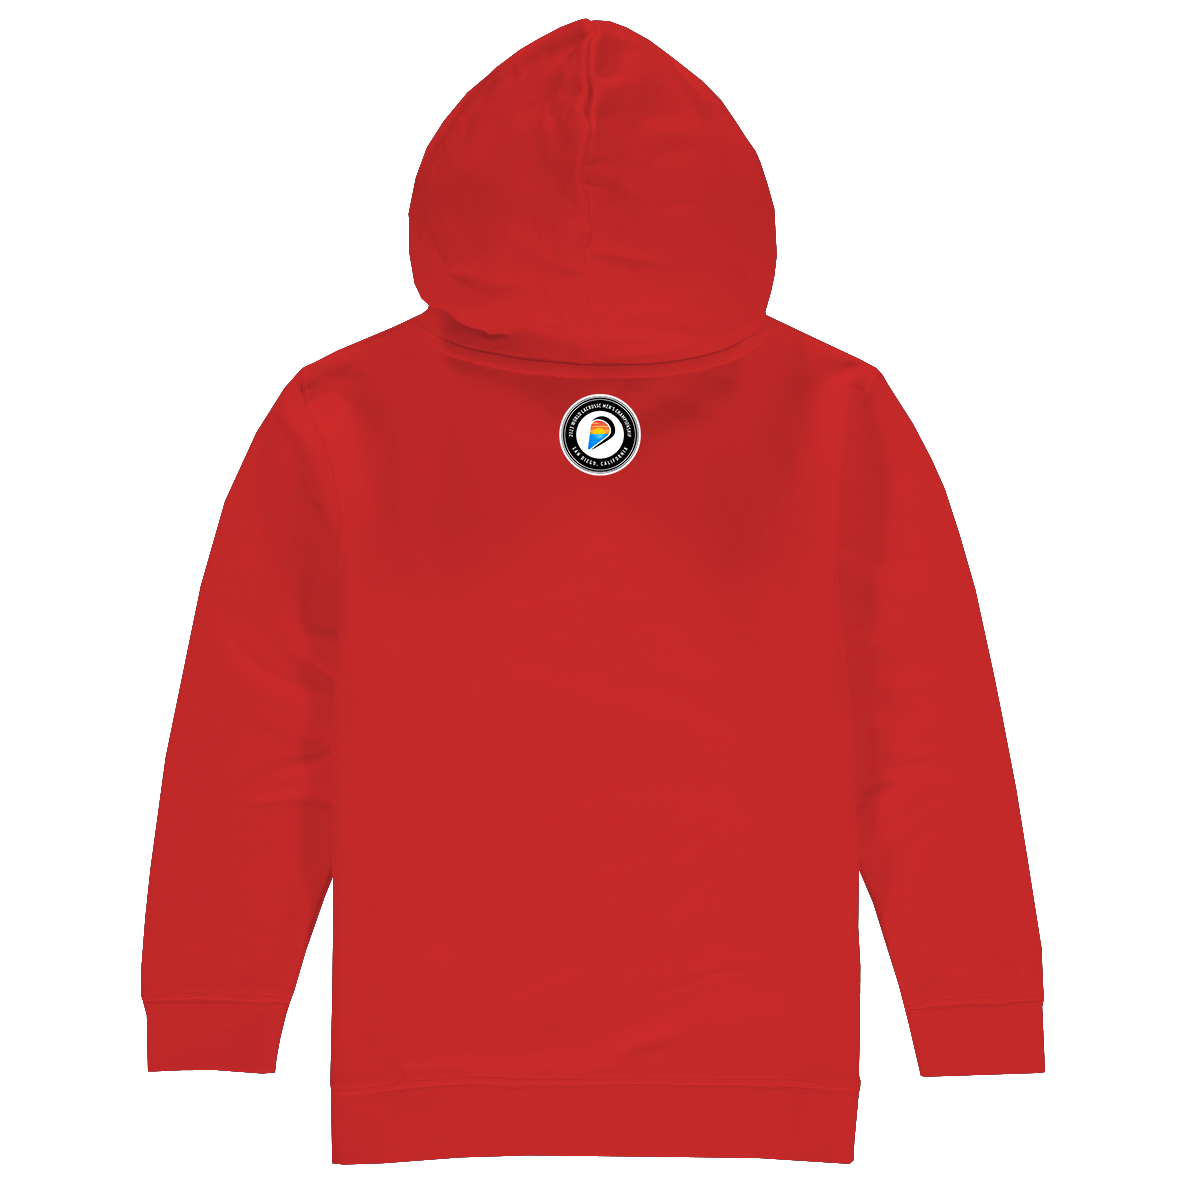 England Premium Unisex Hoodie Sweatshirt Red